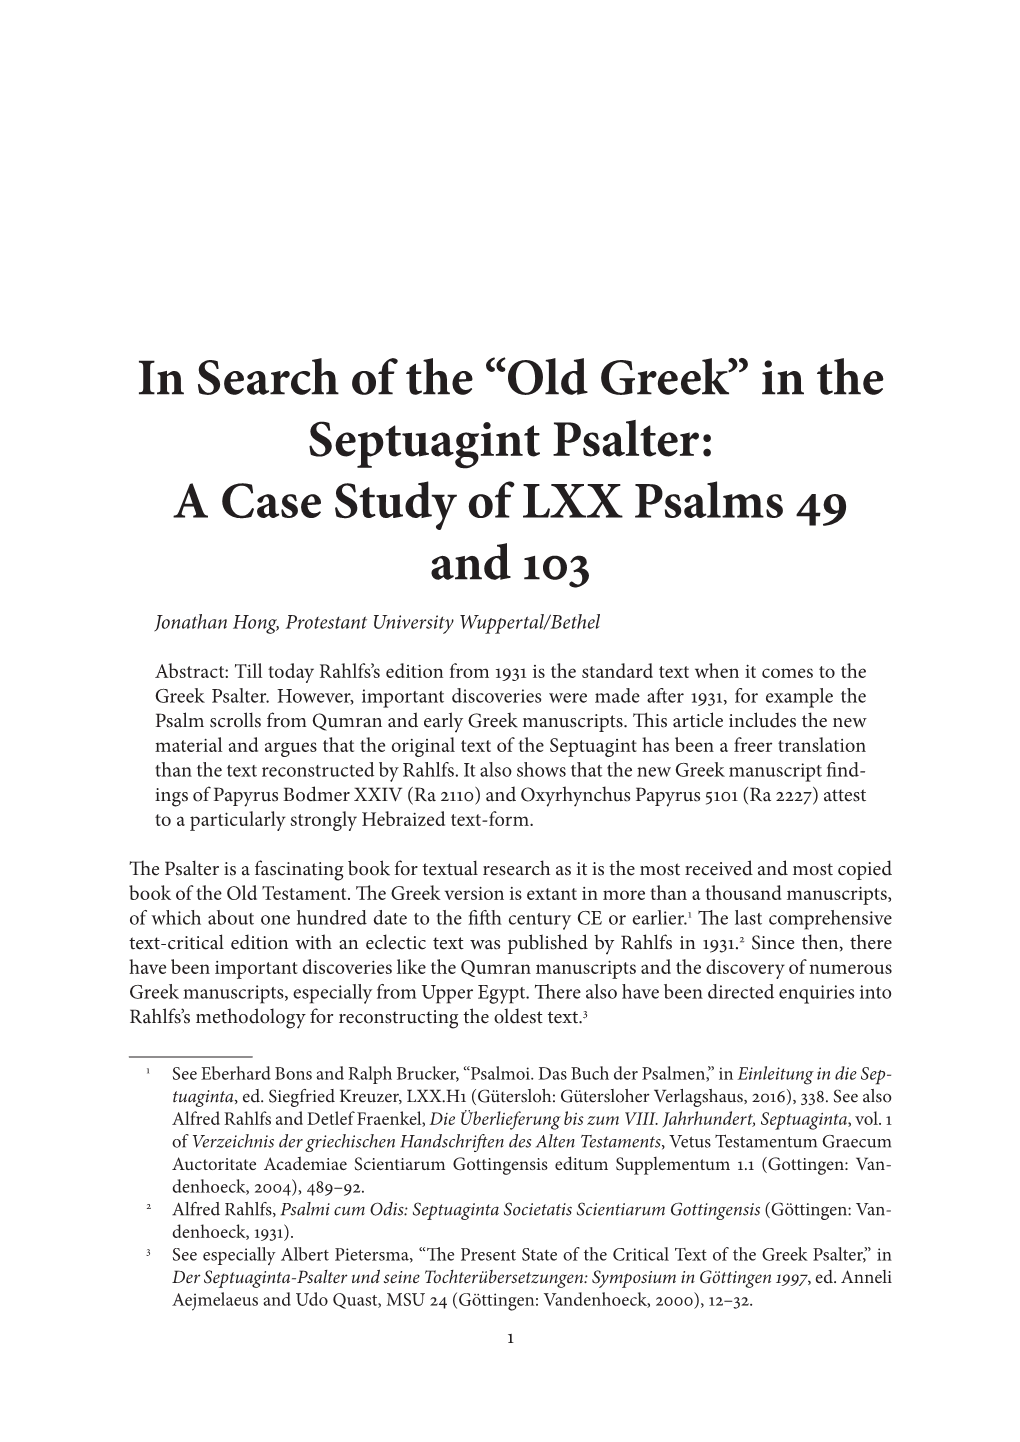 Old Greek' in the Septuagint Psalter